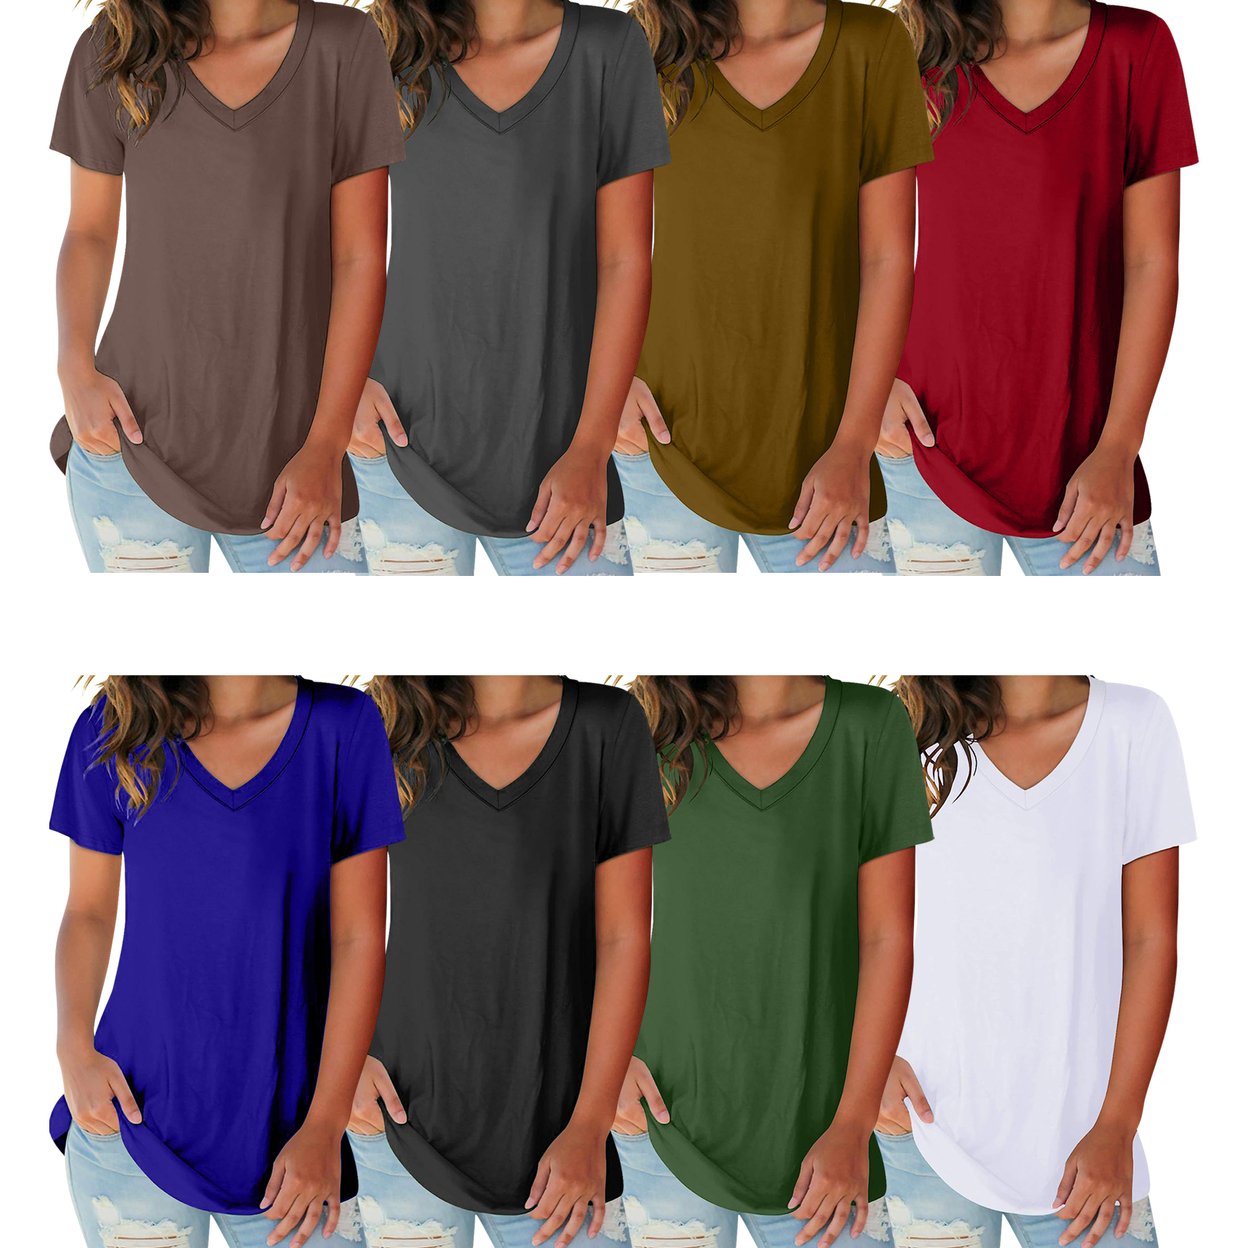 Women's Ultra-Soft Smooth Cotton Blend Basic V-Neck Short Sleeve Shirts - Navy, Small